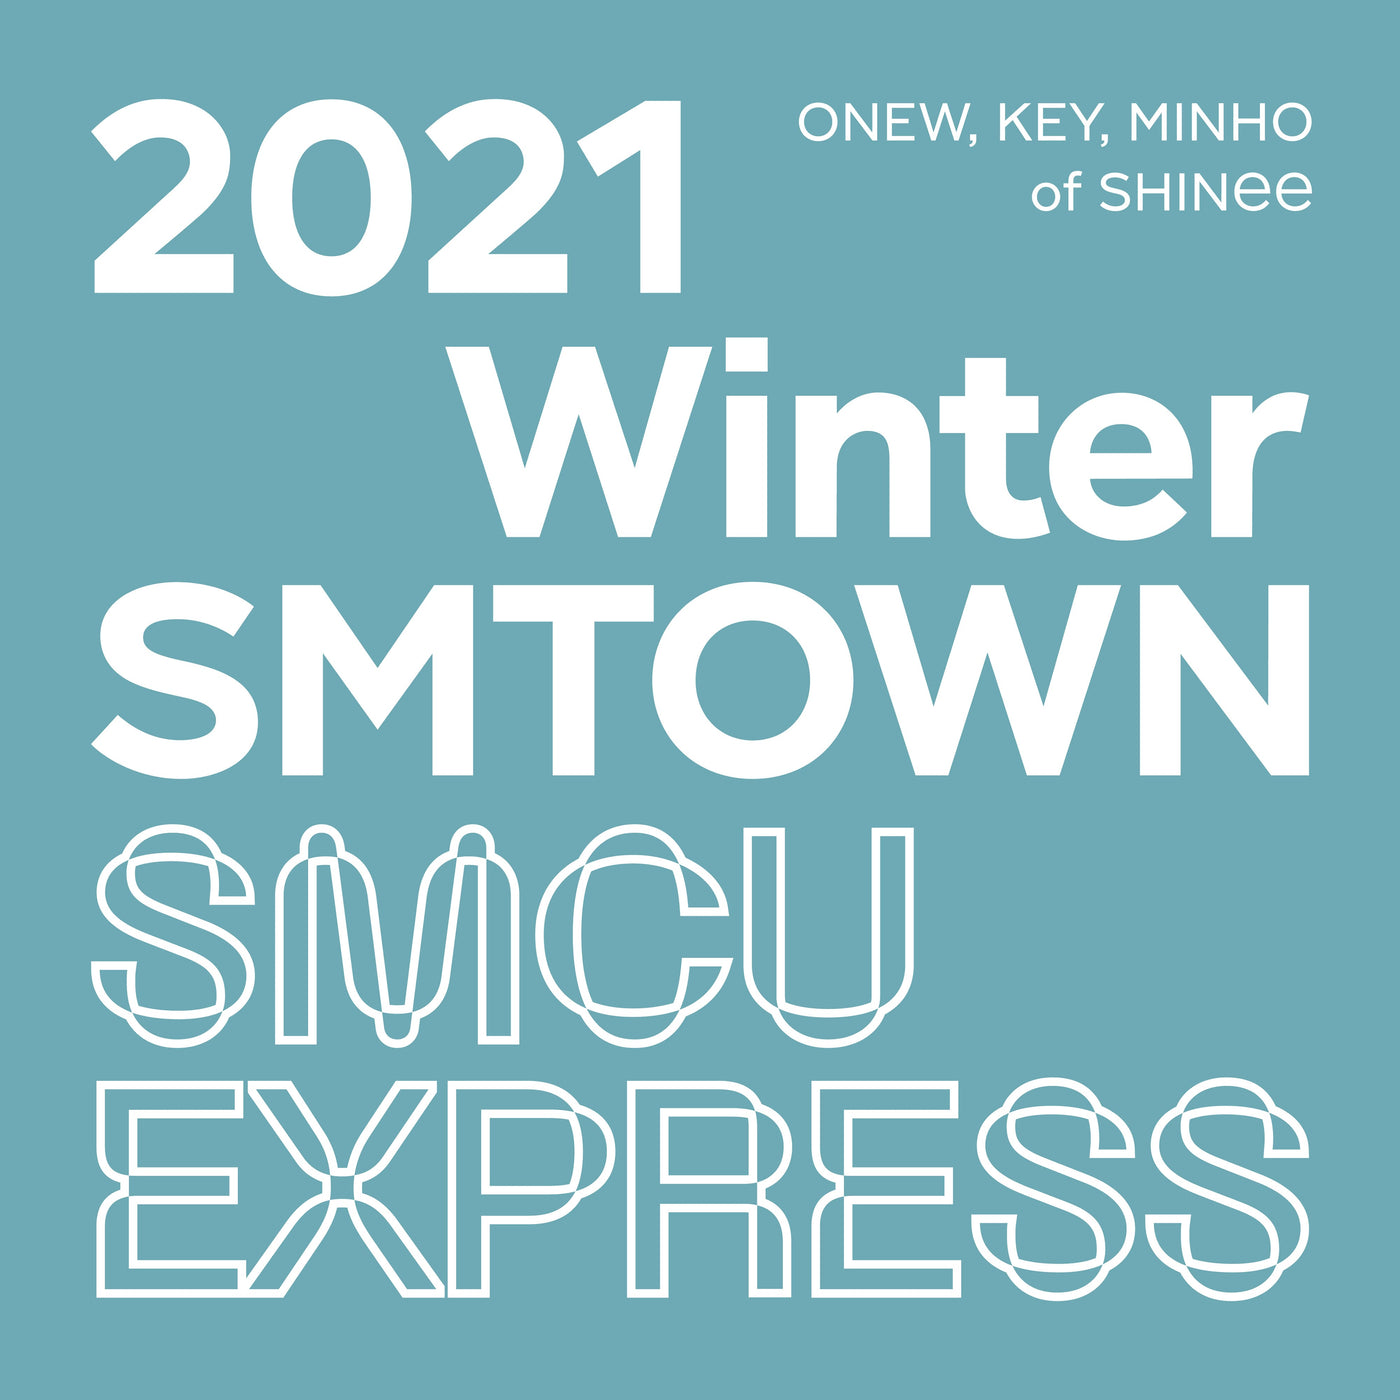 SHINee 2021 Winter SMTOWN : SMCU EXPRESS (ONEW, KEY, MINHO of SHINee) 🇰🇷